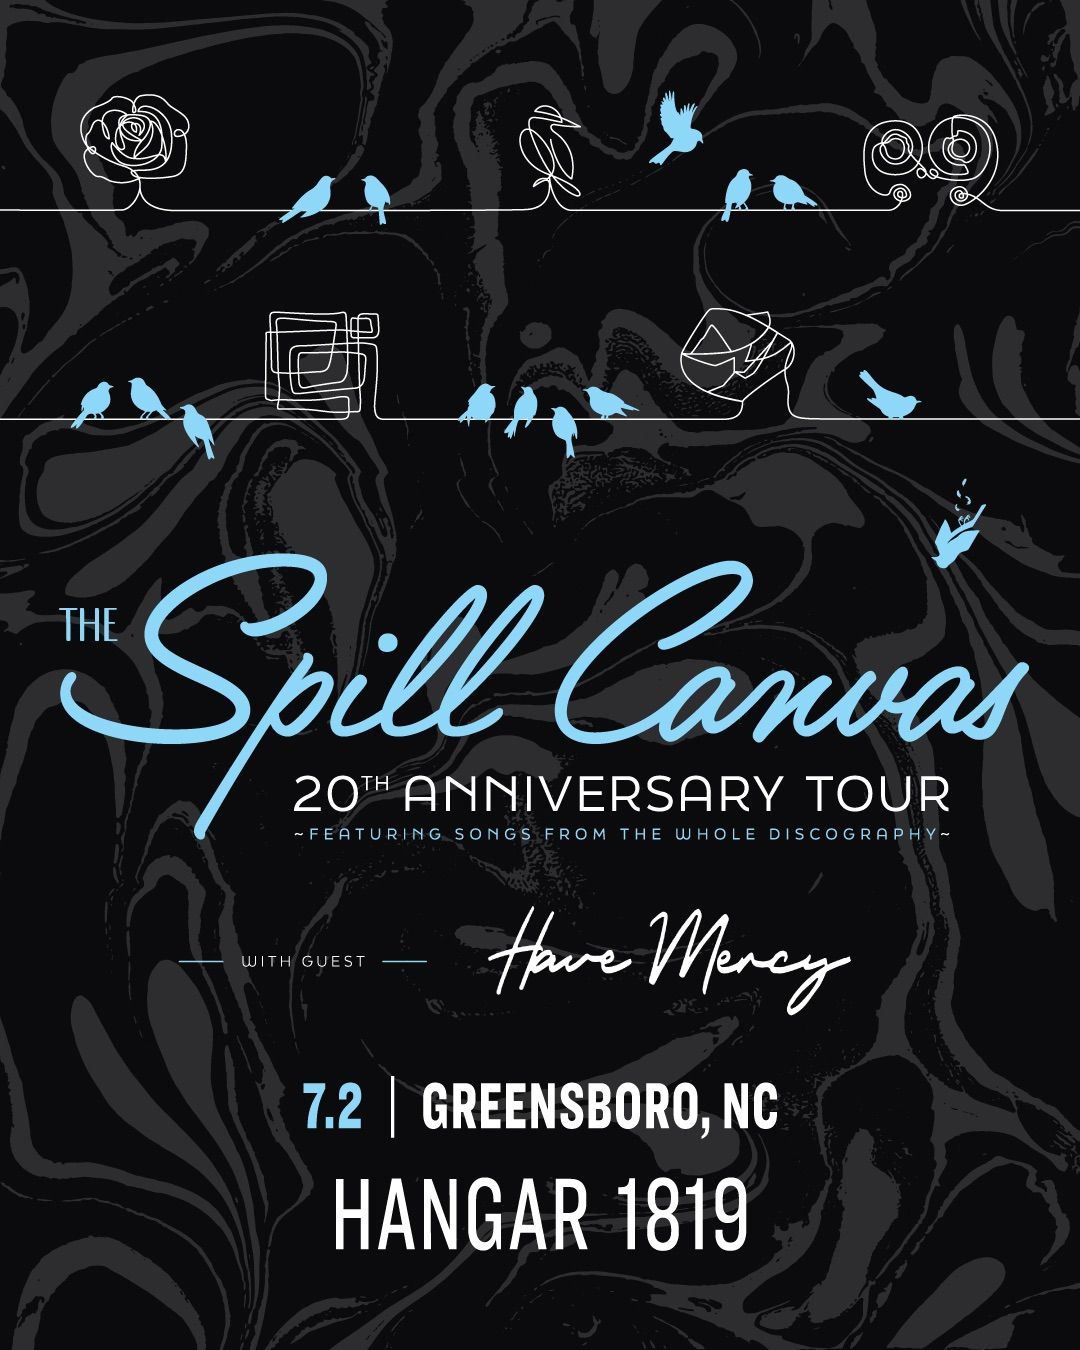 The Spill Canvas - 20th Anniversary Tour at Hangar 1819